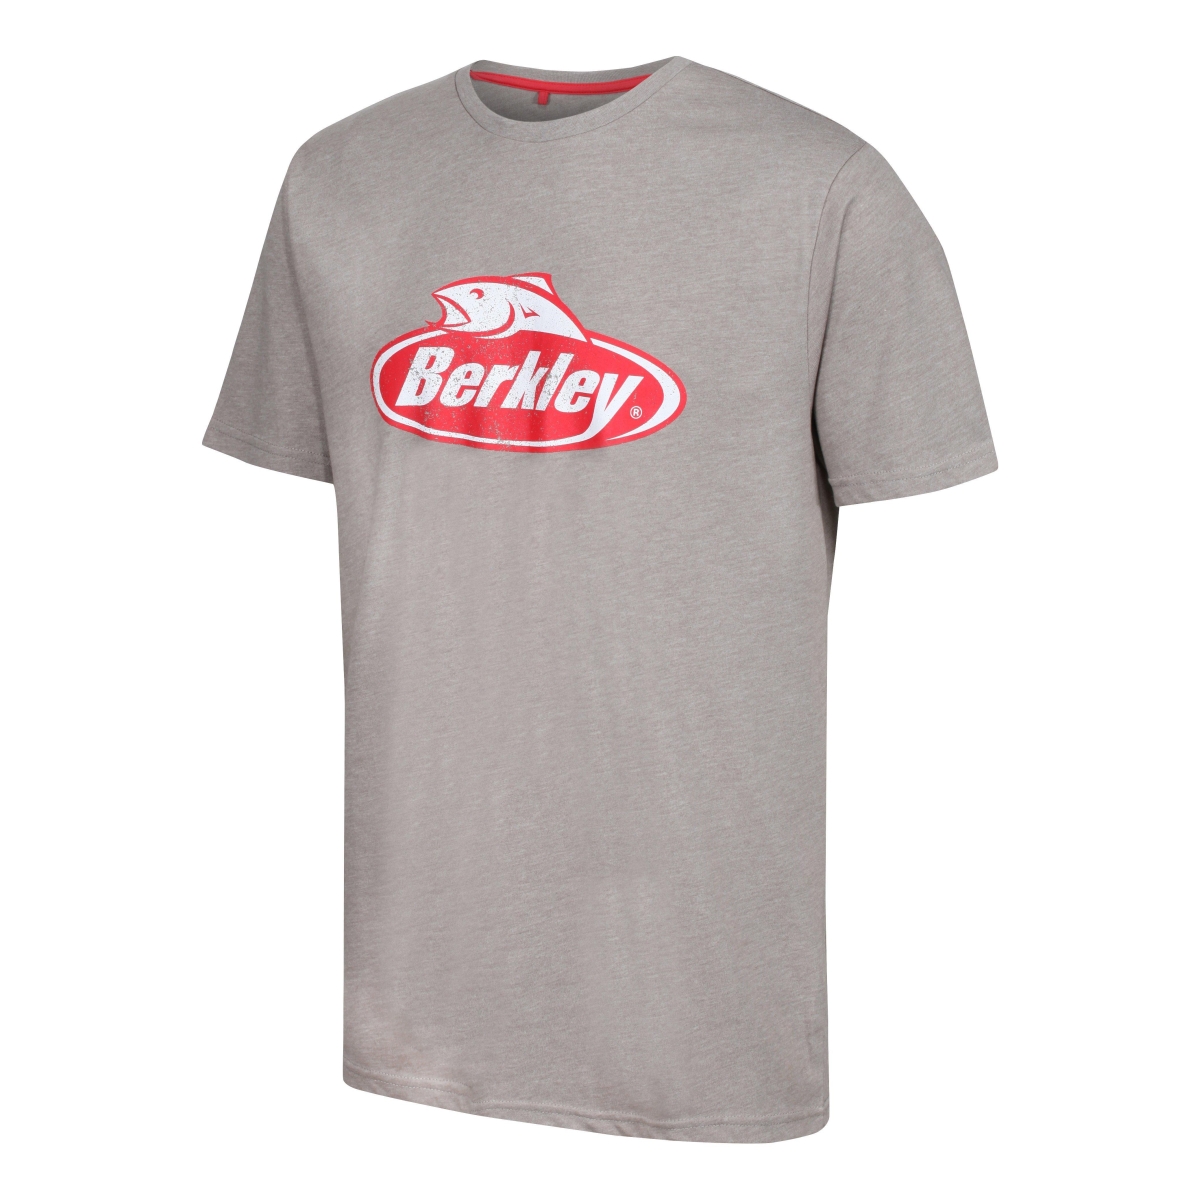 Tričko s krátkým rukávem pro rybáře Berkley T-Shirt GreyBERKLEY T-SHIRT GREY